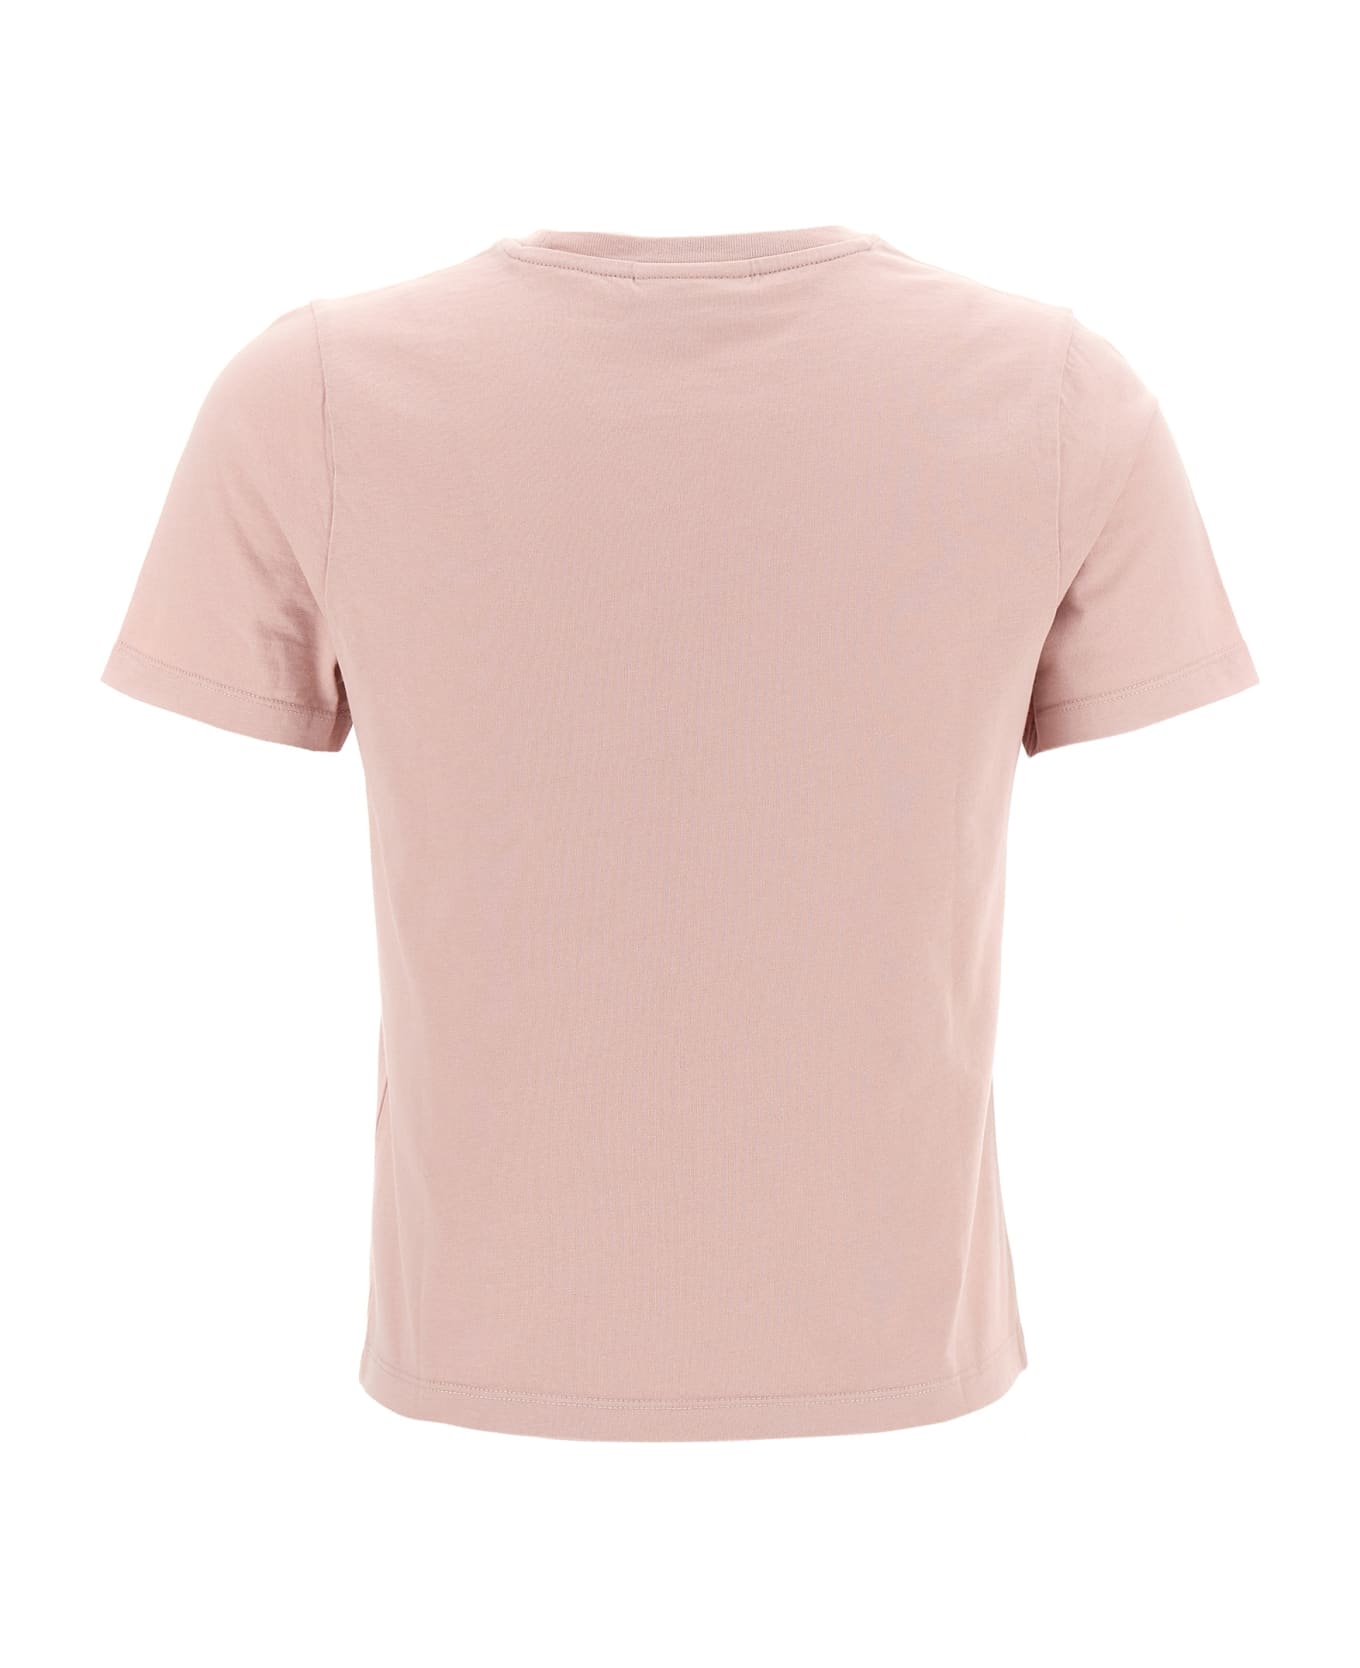 Maison Kitsuné 'floating Flower' T-shirt - Pink